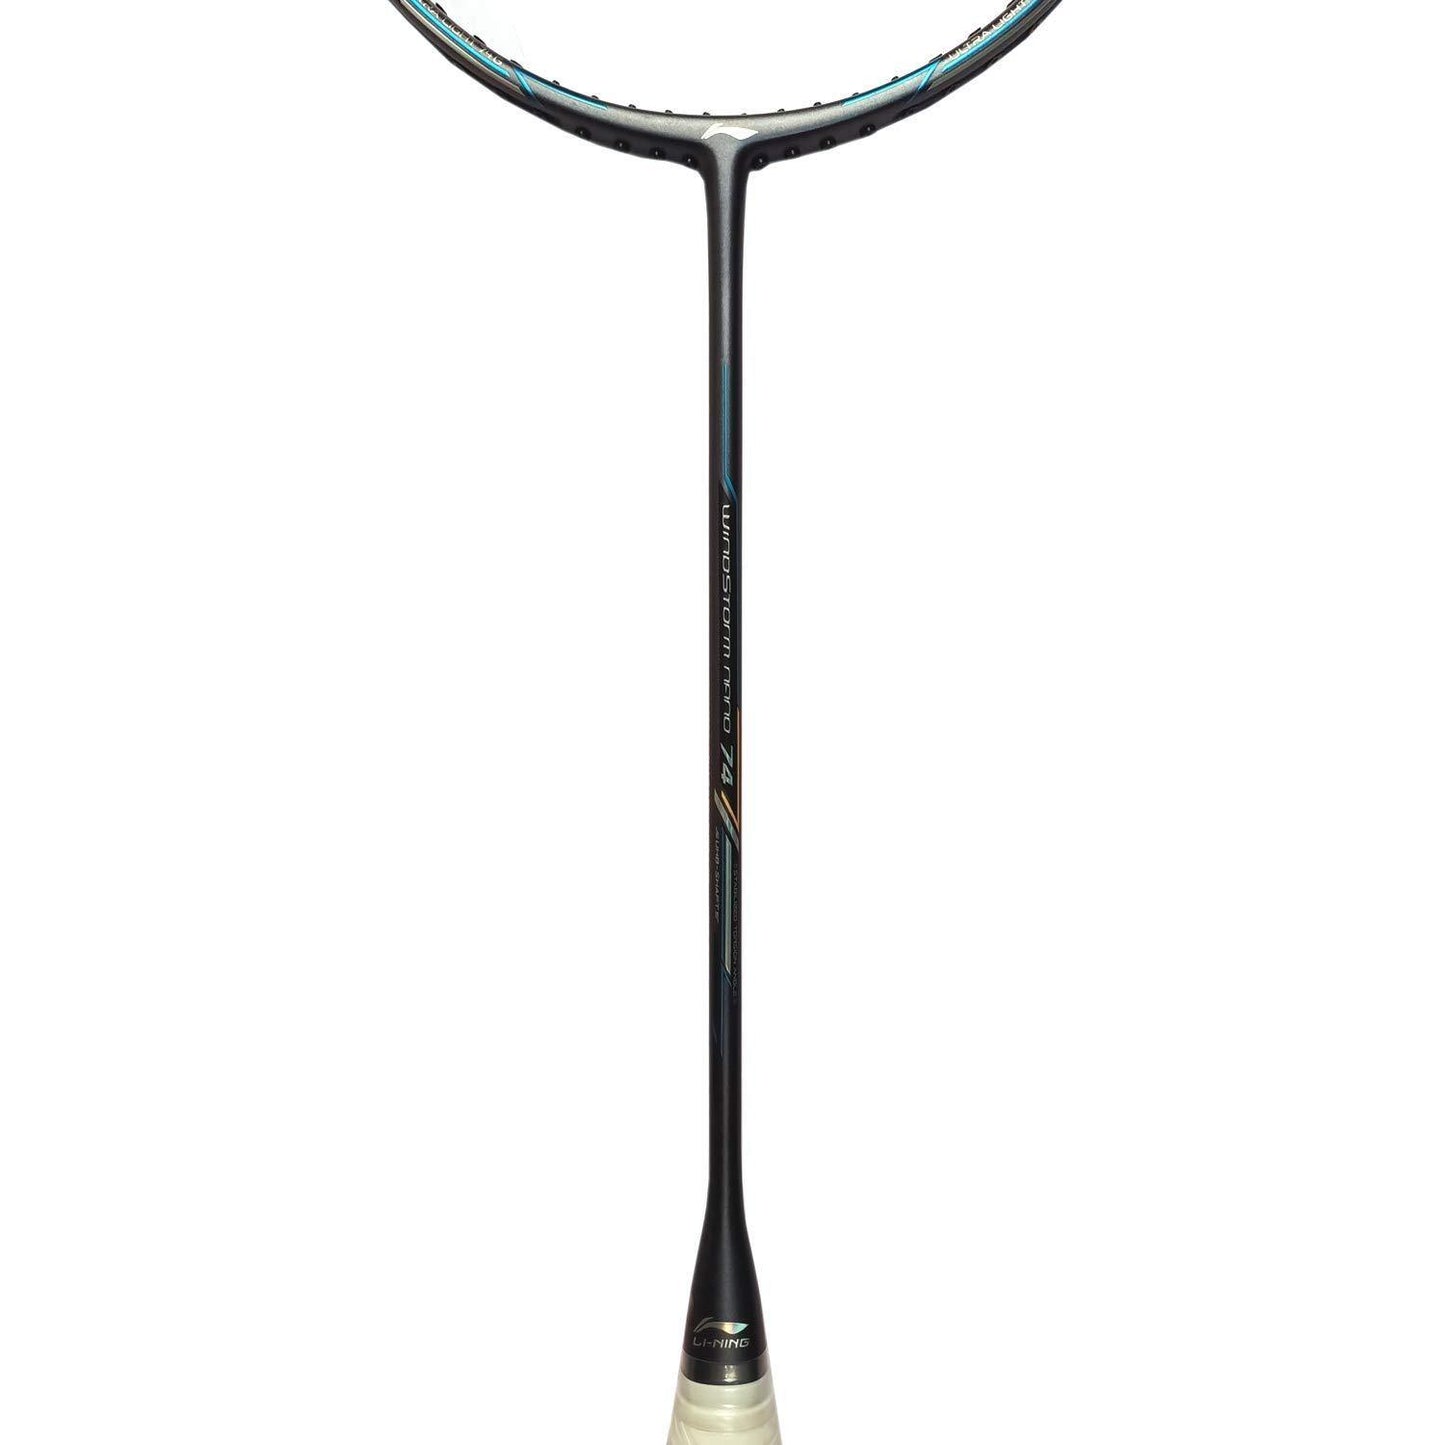 Li-Ning Windstorm Nano 74 Professional Badminton Racquet Unstrung Grey/Blue - Best Price online Prokicksports.com